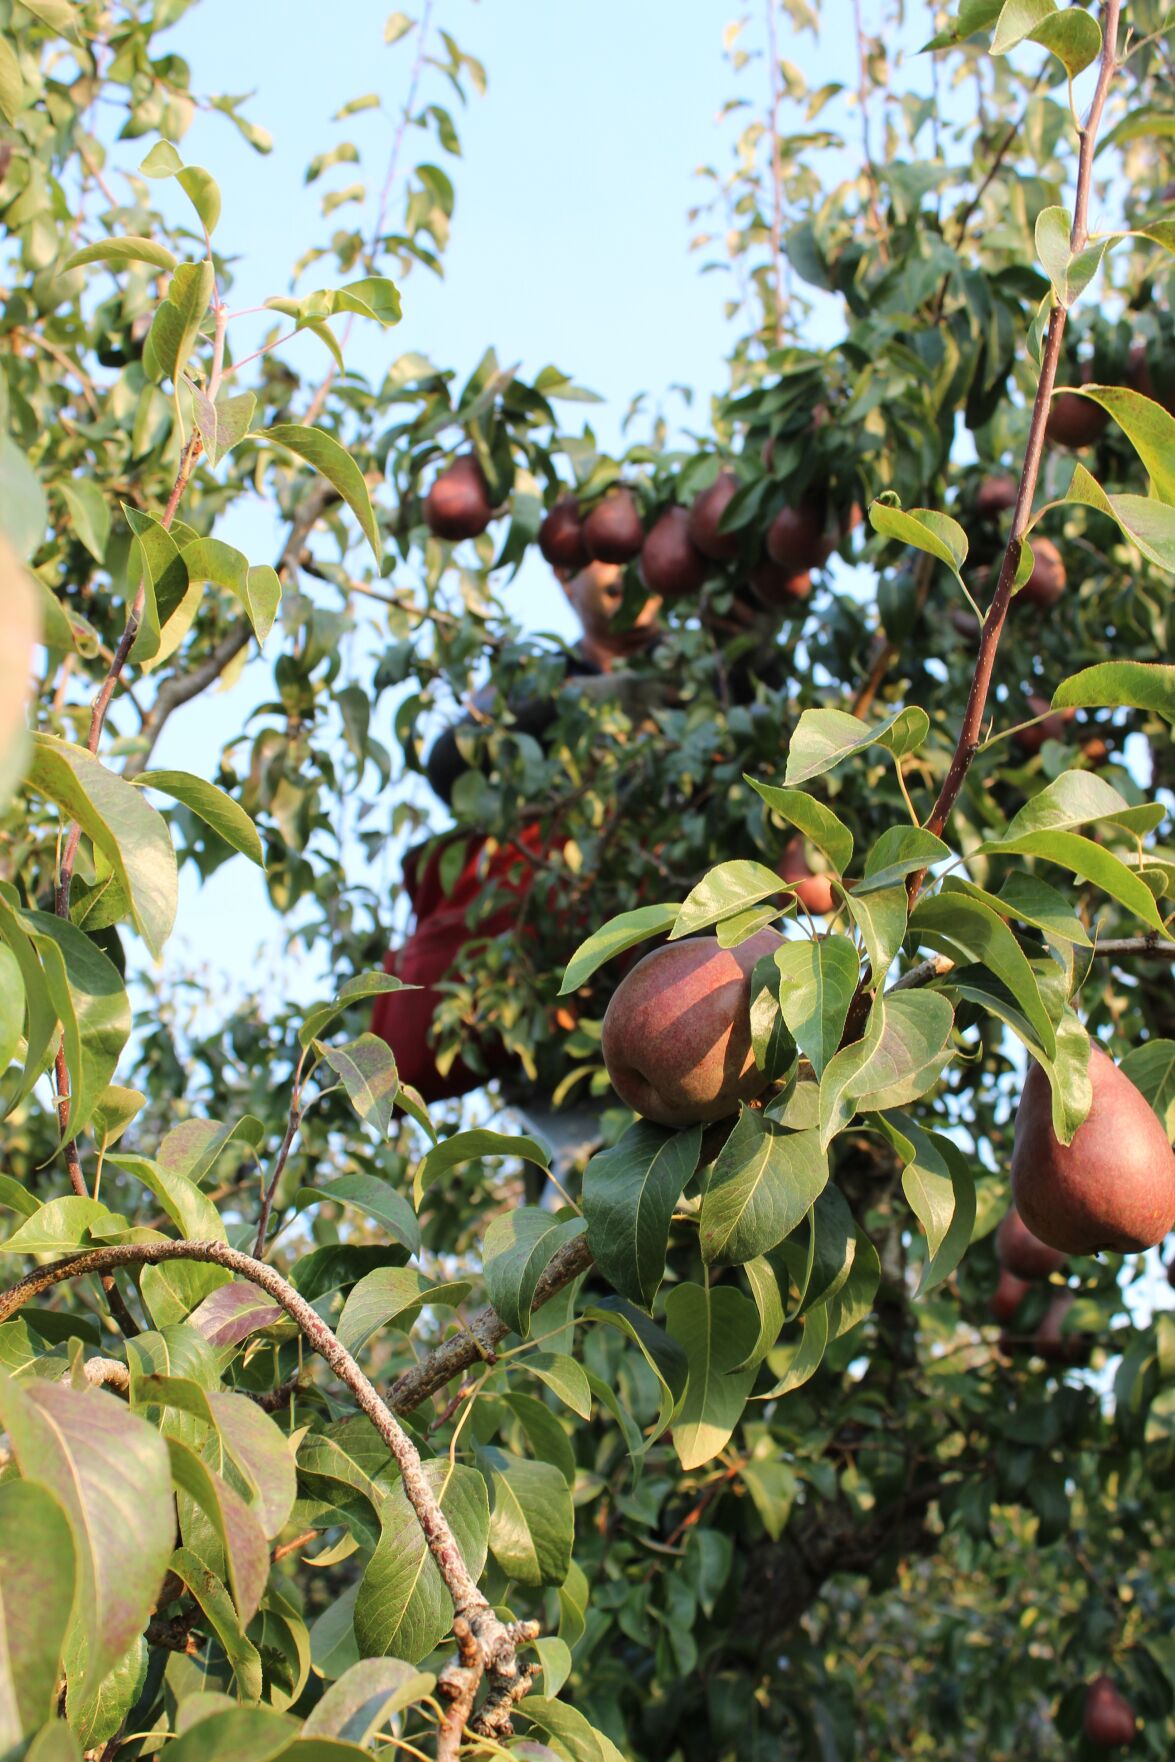 Bartlett Pears - Organic Bartlett Pears - Washington Pear Growers